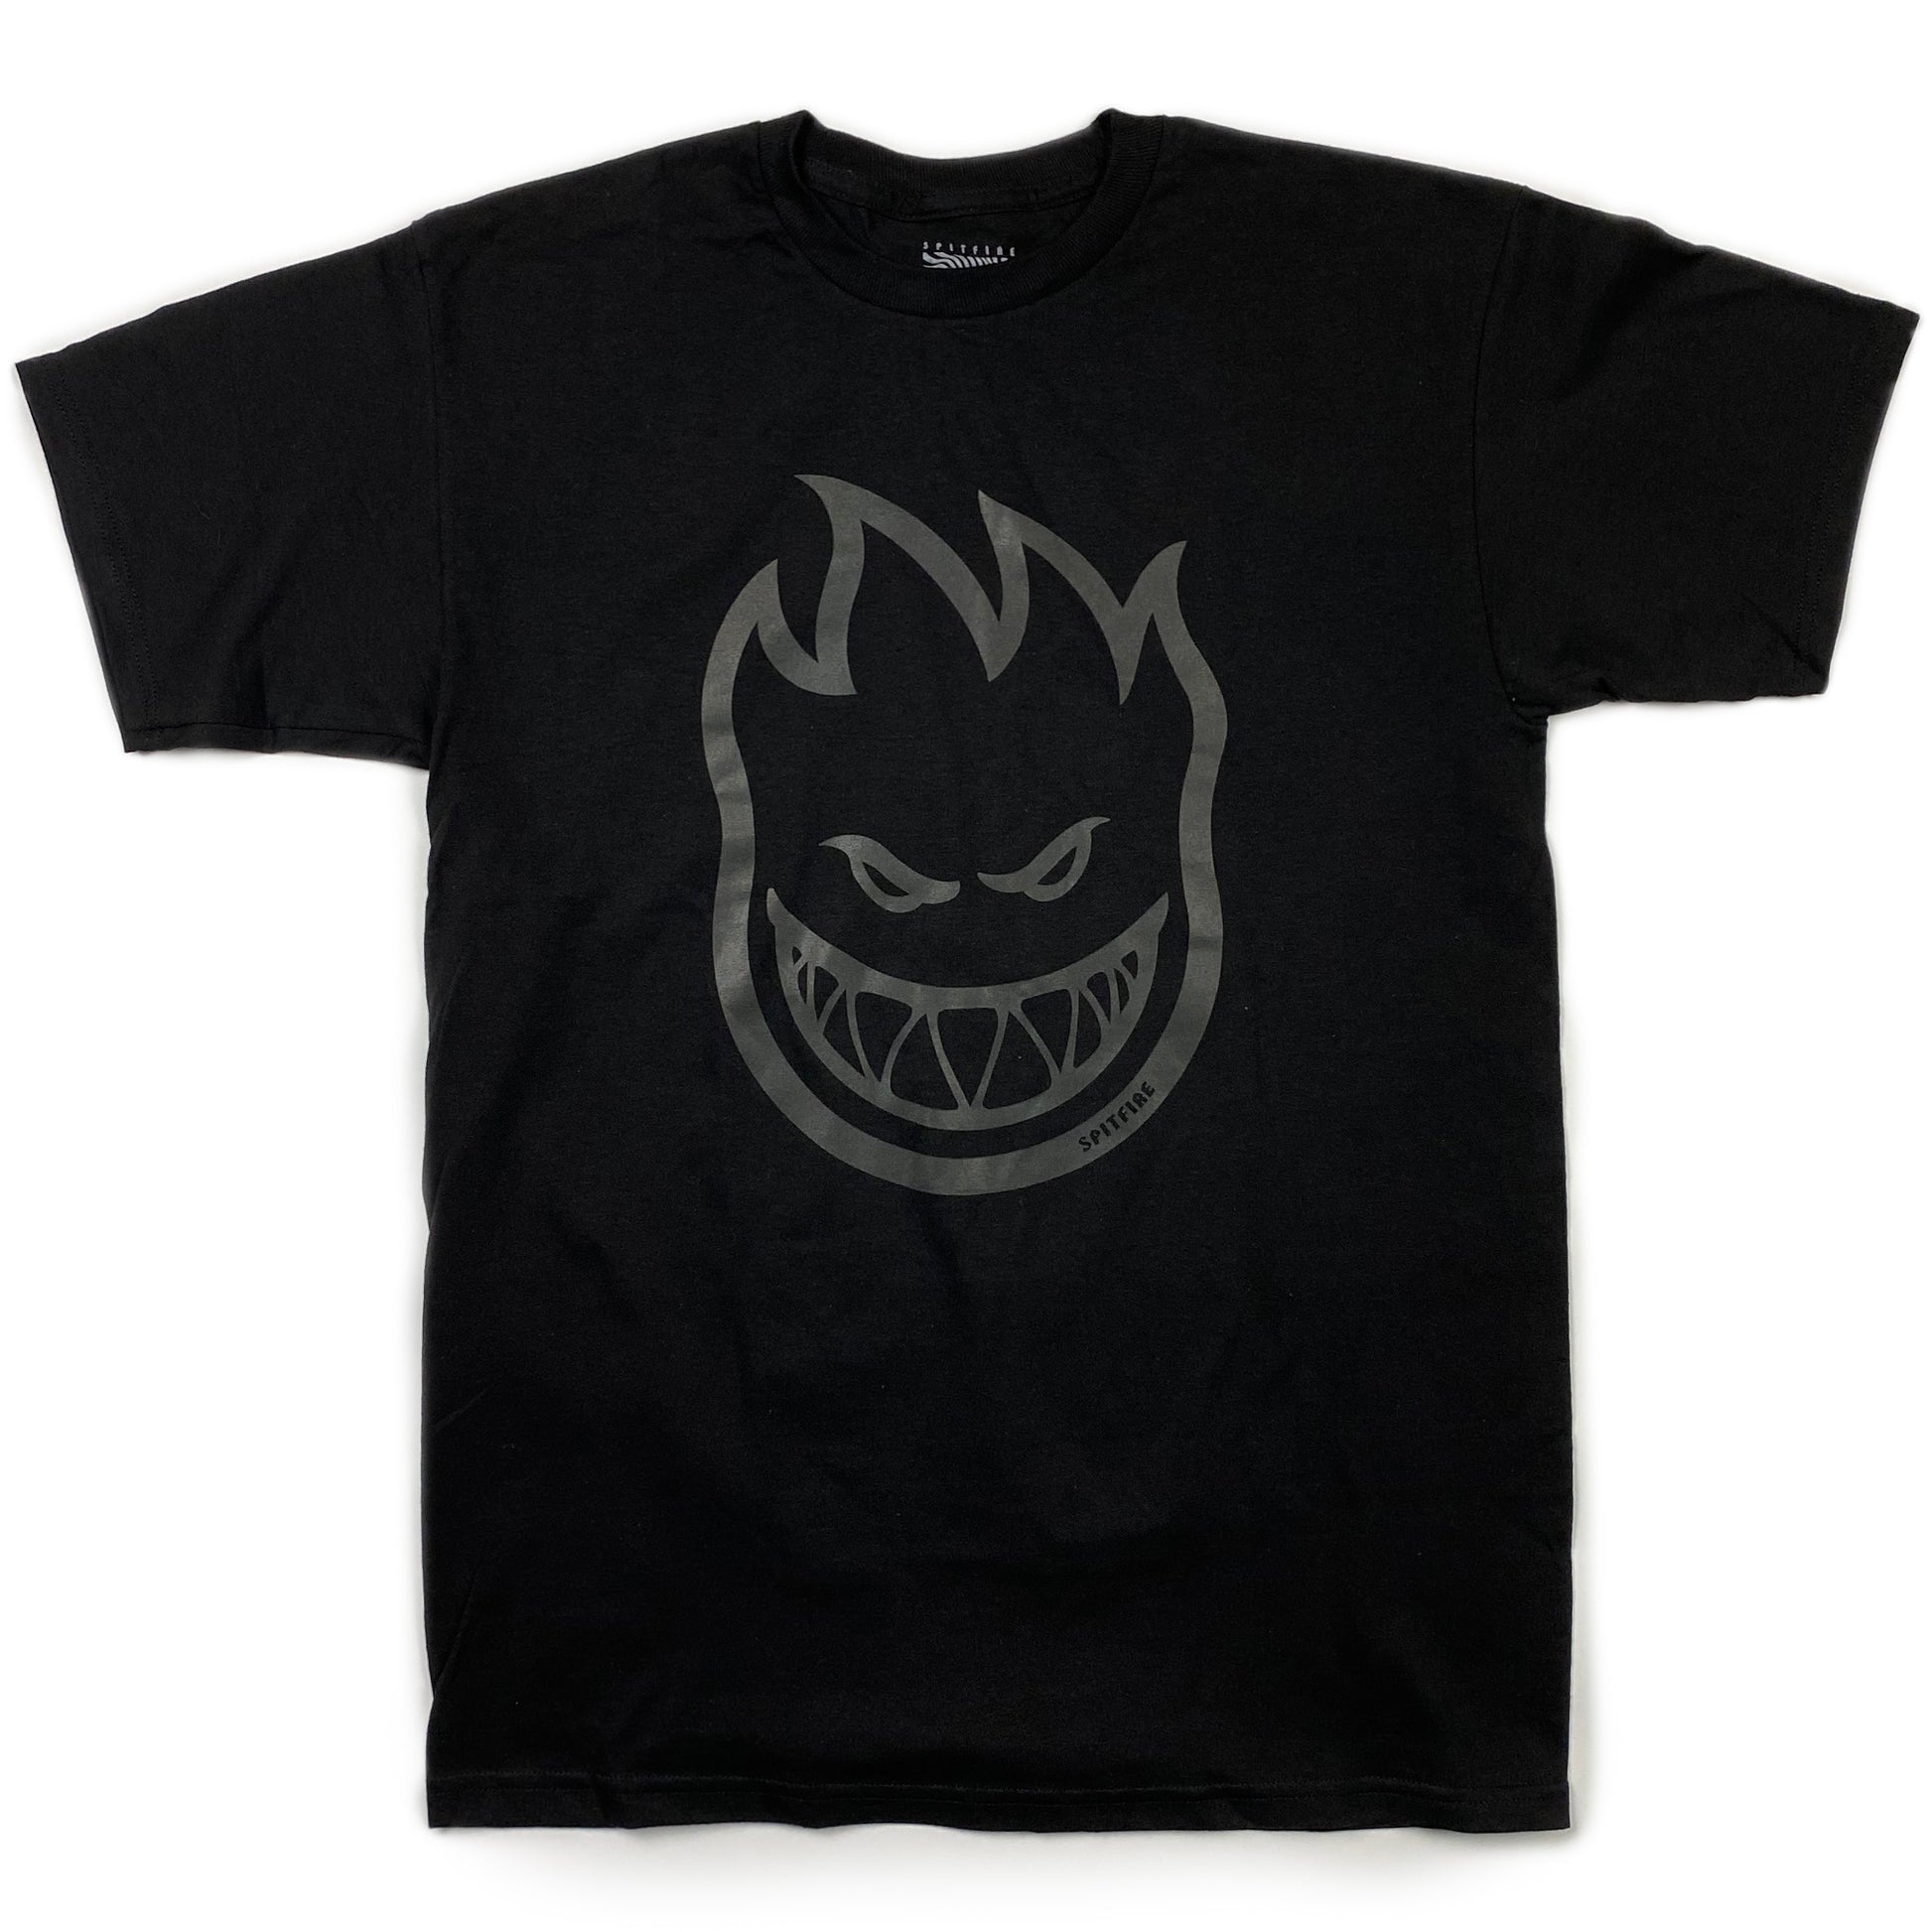 Spitfire Bighead Blackout T Shirt - Black / Black - Prime Delux Store